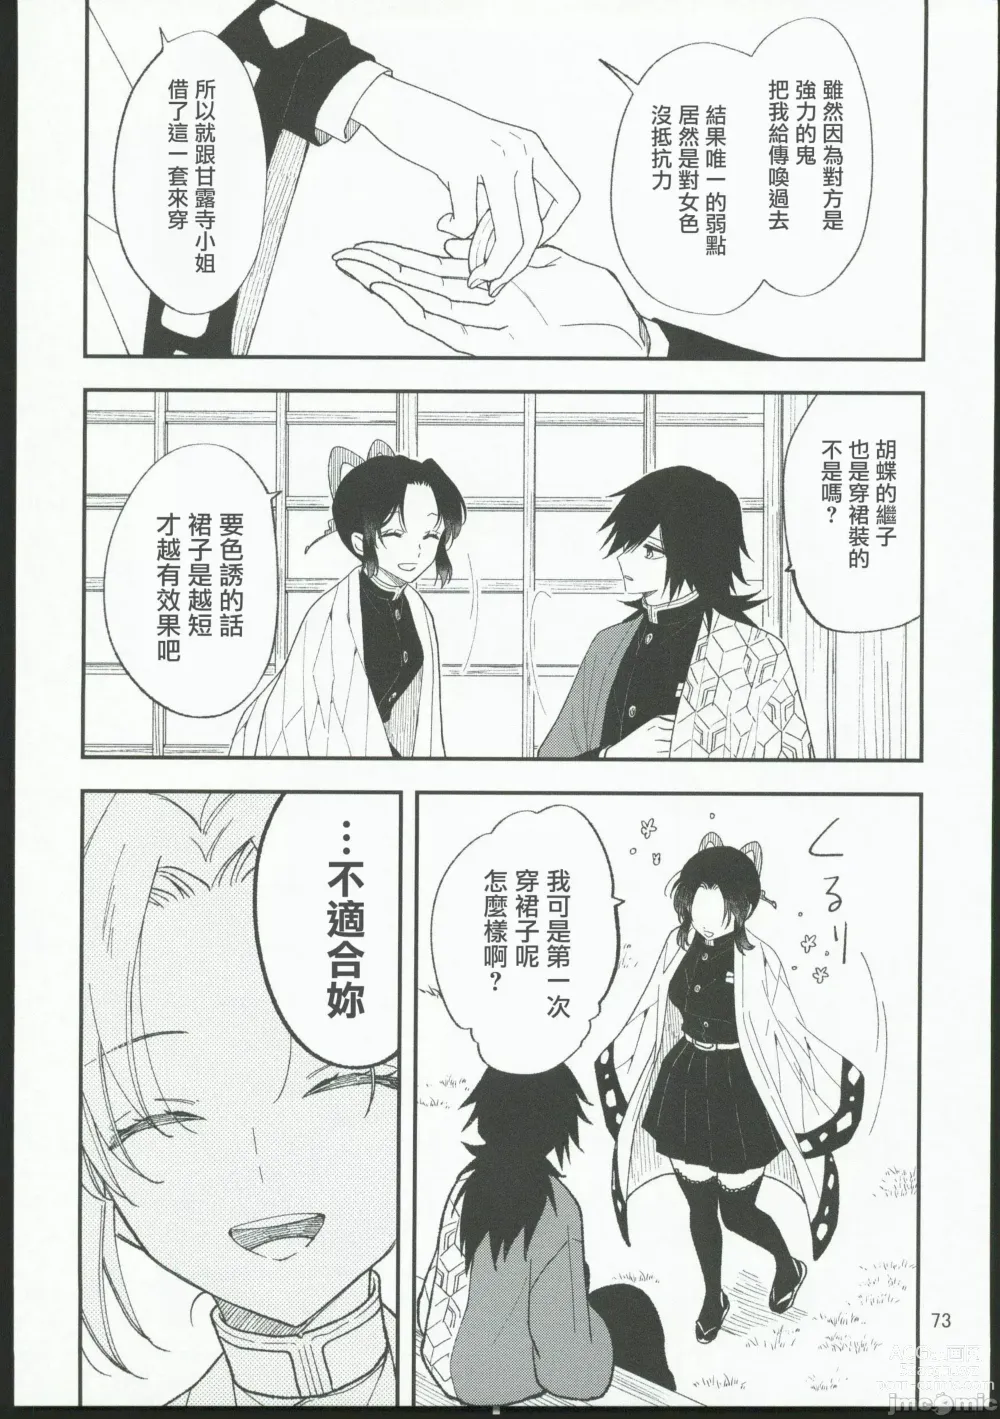 Page 72 of doujinshi Koi Tsumugi